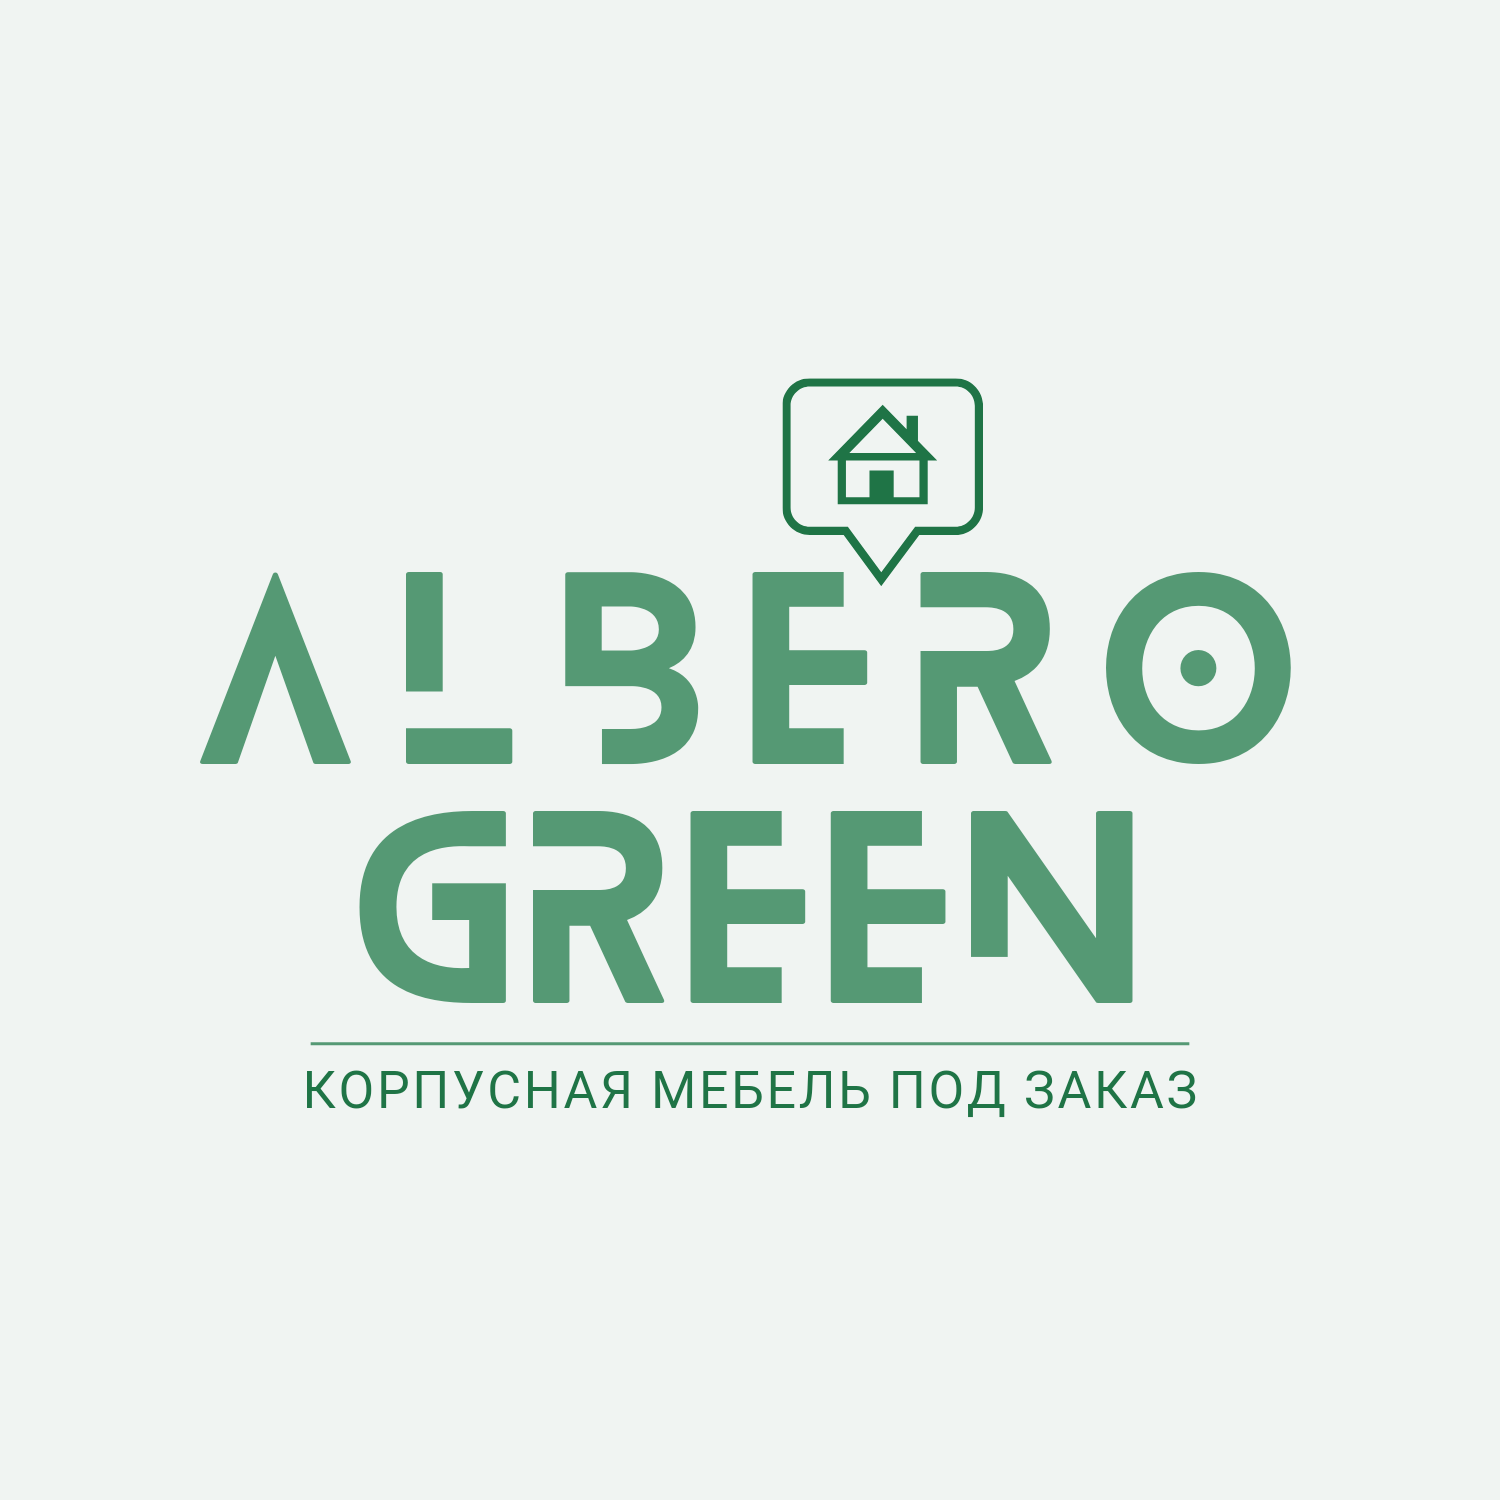 ALBERO - GREEN